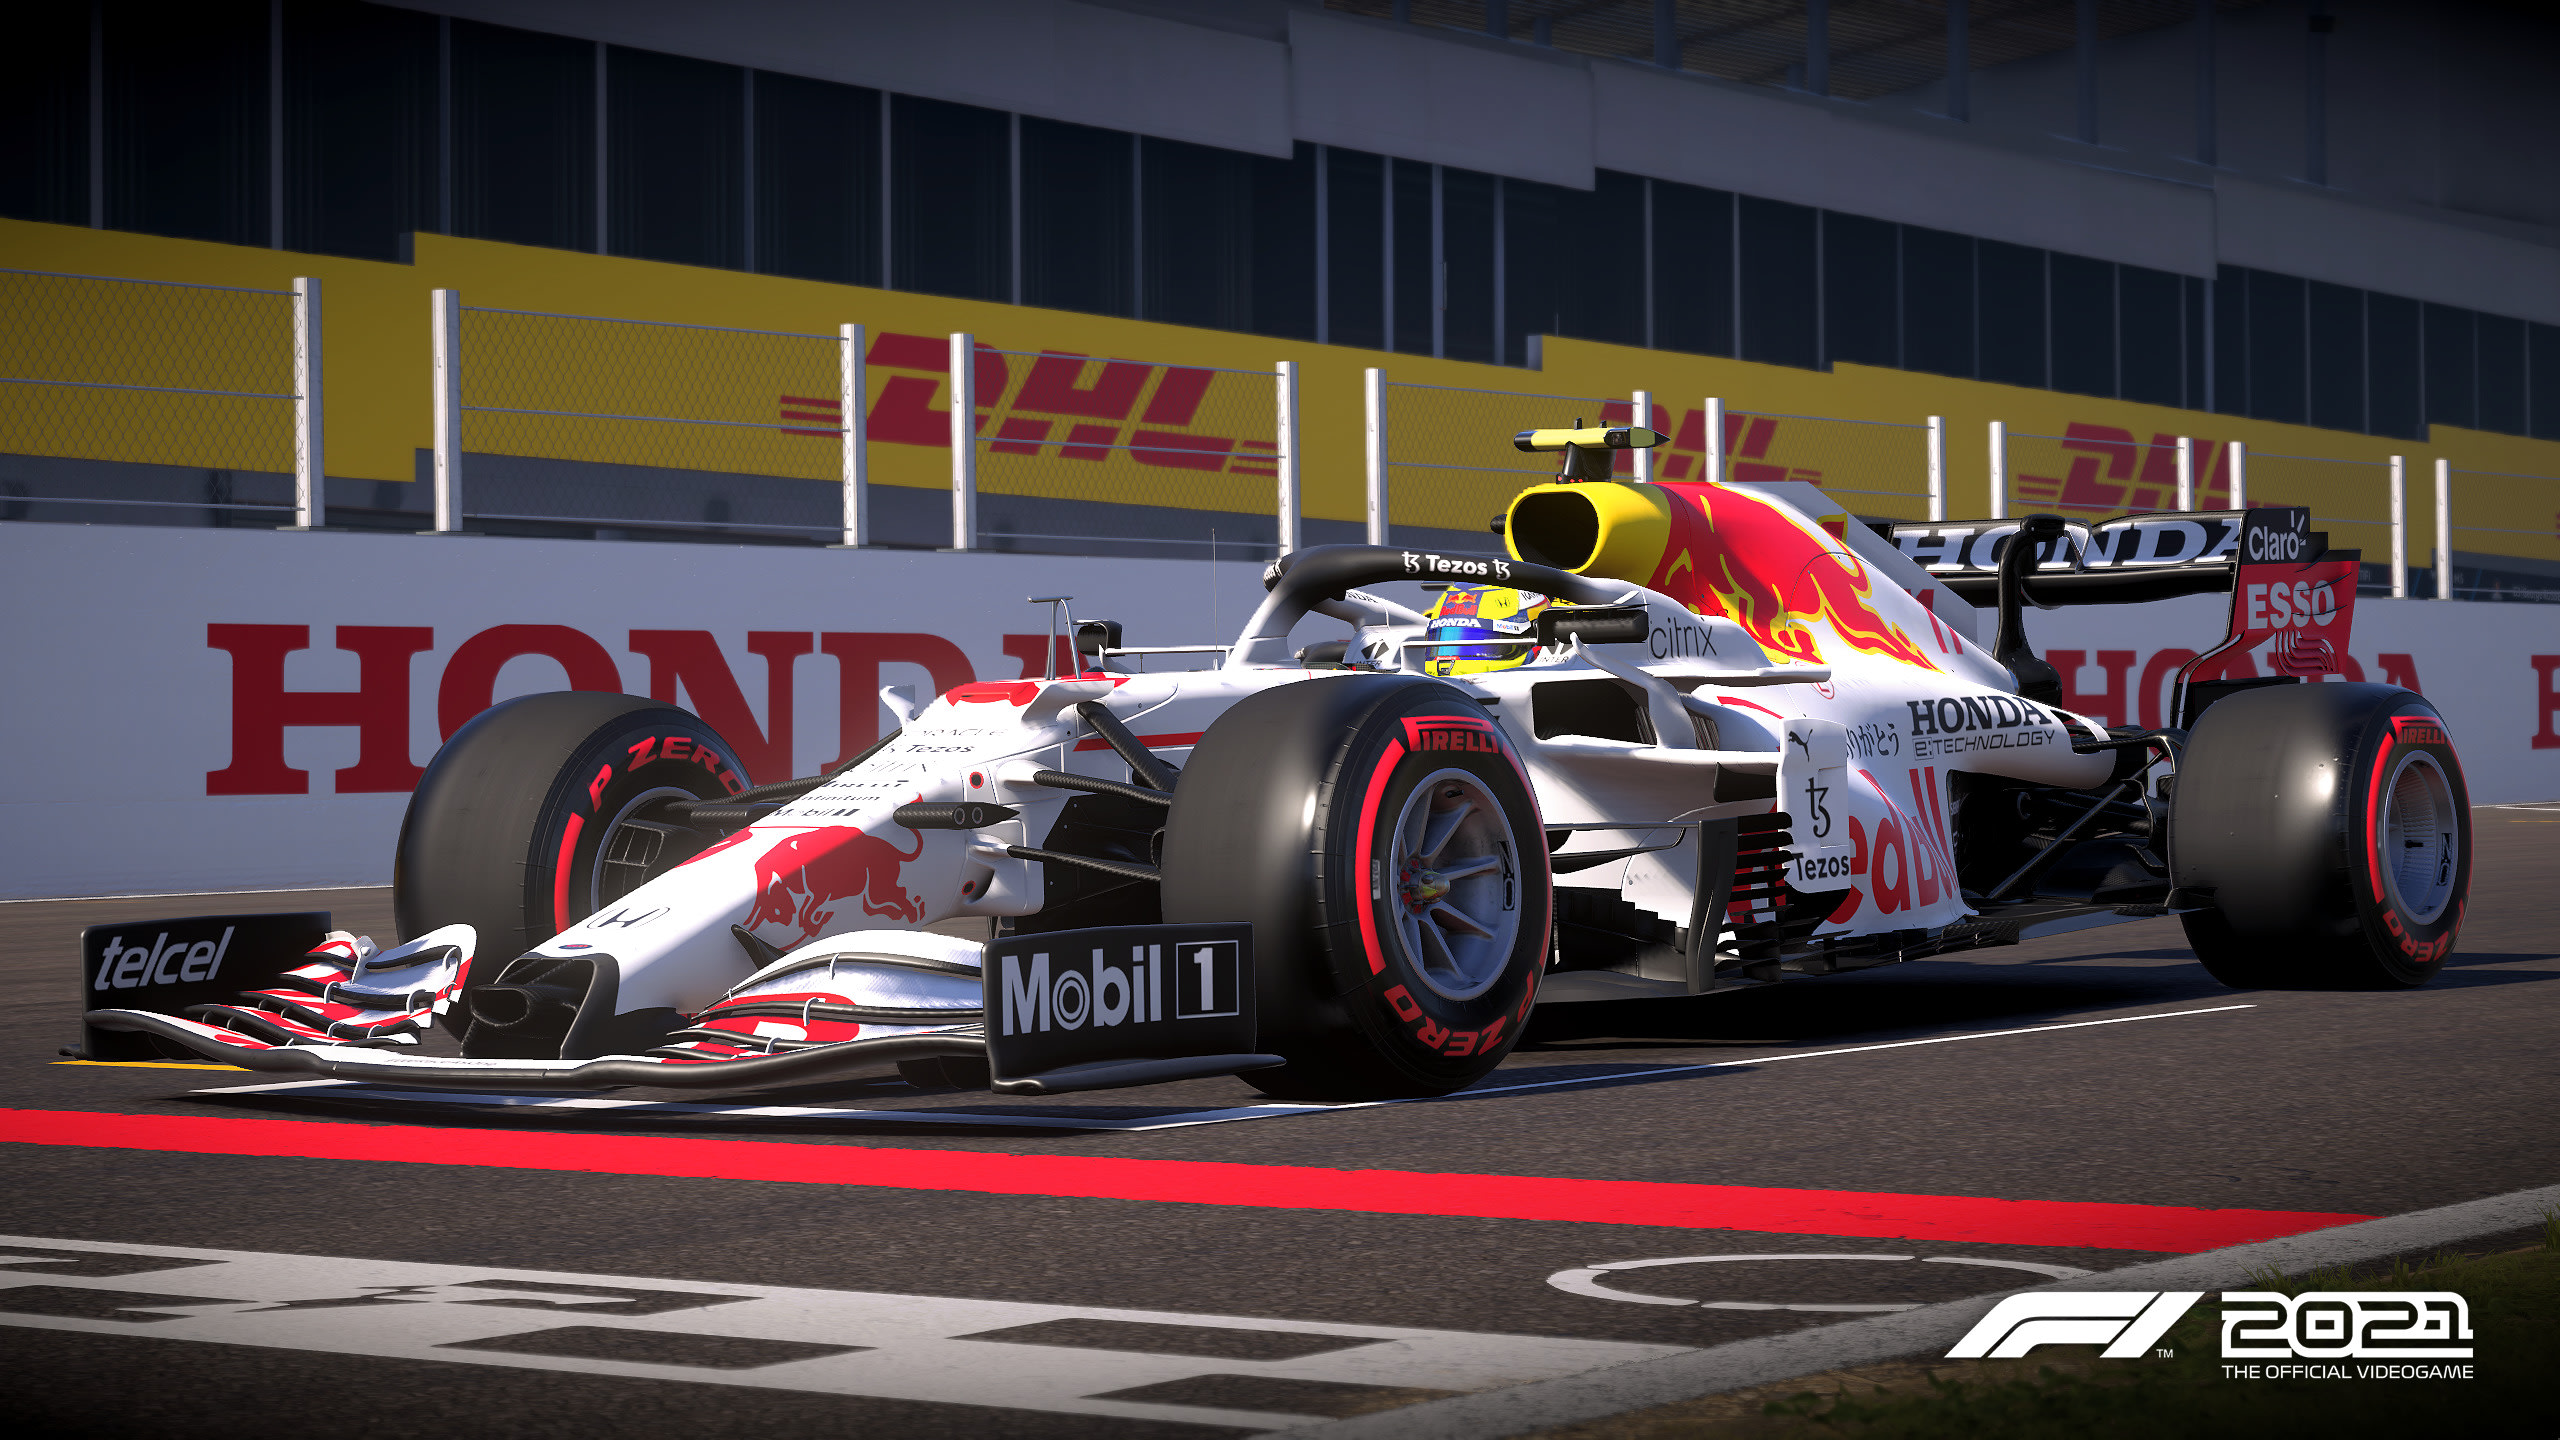 video game, f1 2021, formula 1, race car